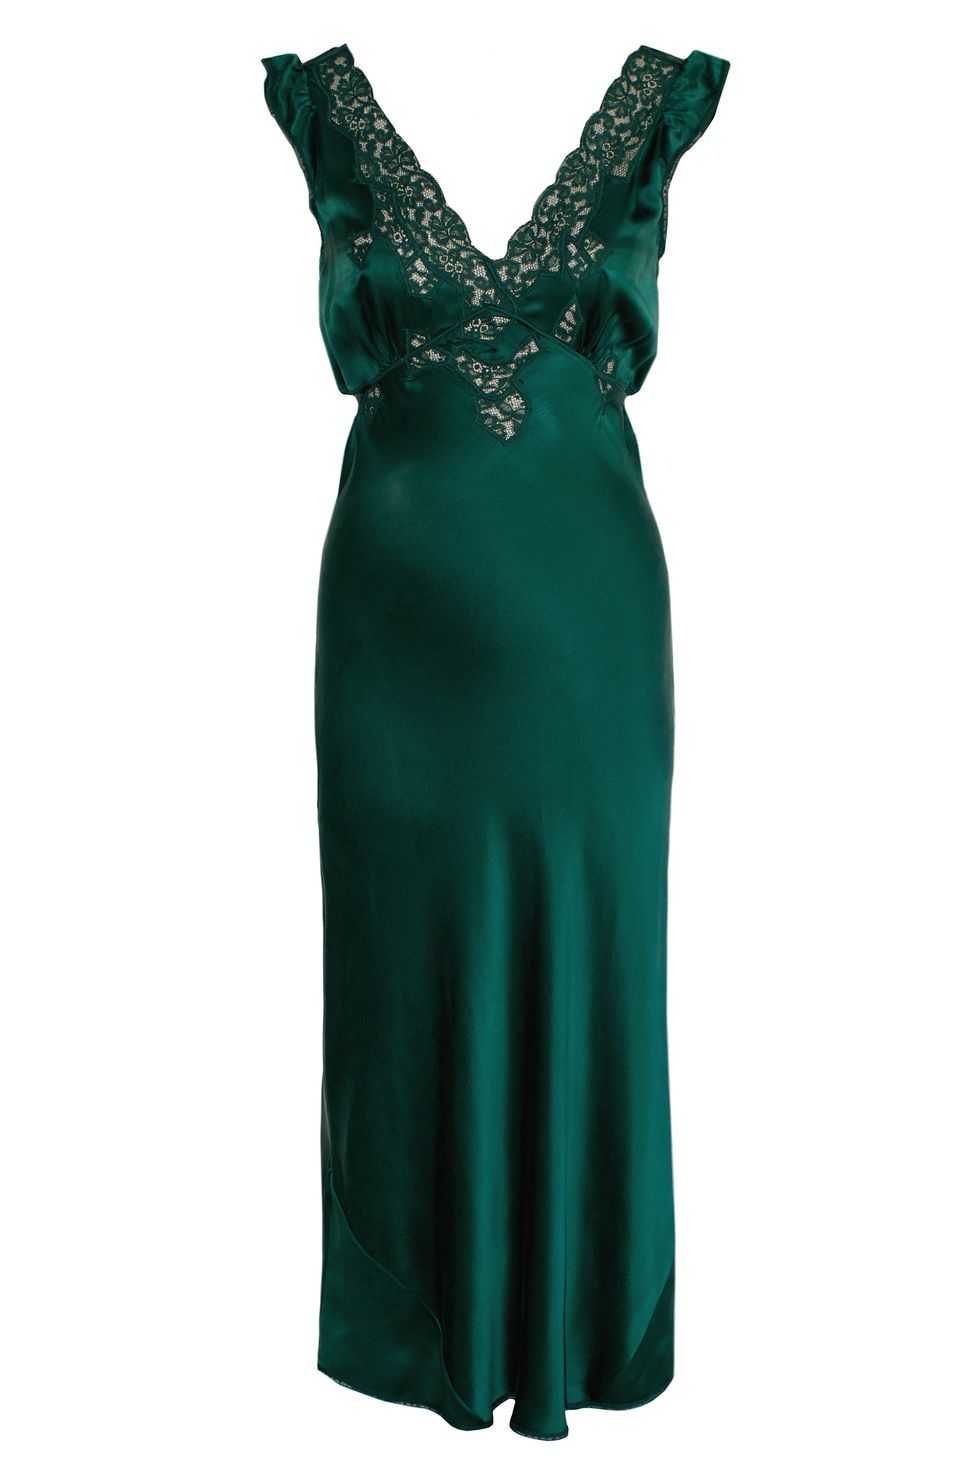 <p>Lily Ashwell Mary Dress, $420; <a href="http://lilyashwell.com/clothes/dresses/mary-dress-jade.html" target="_blank">lilyashwell.com</a></p>